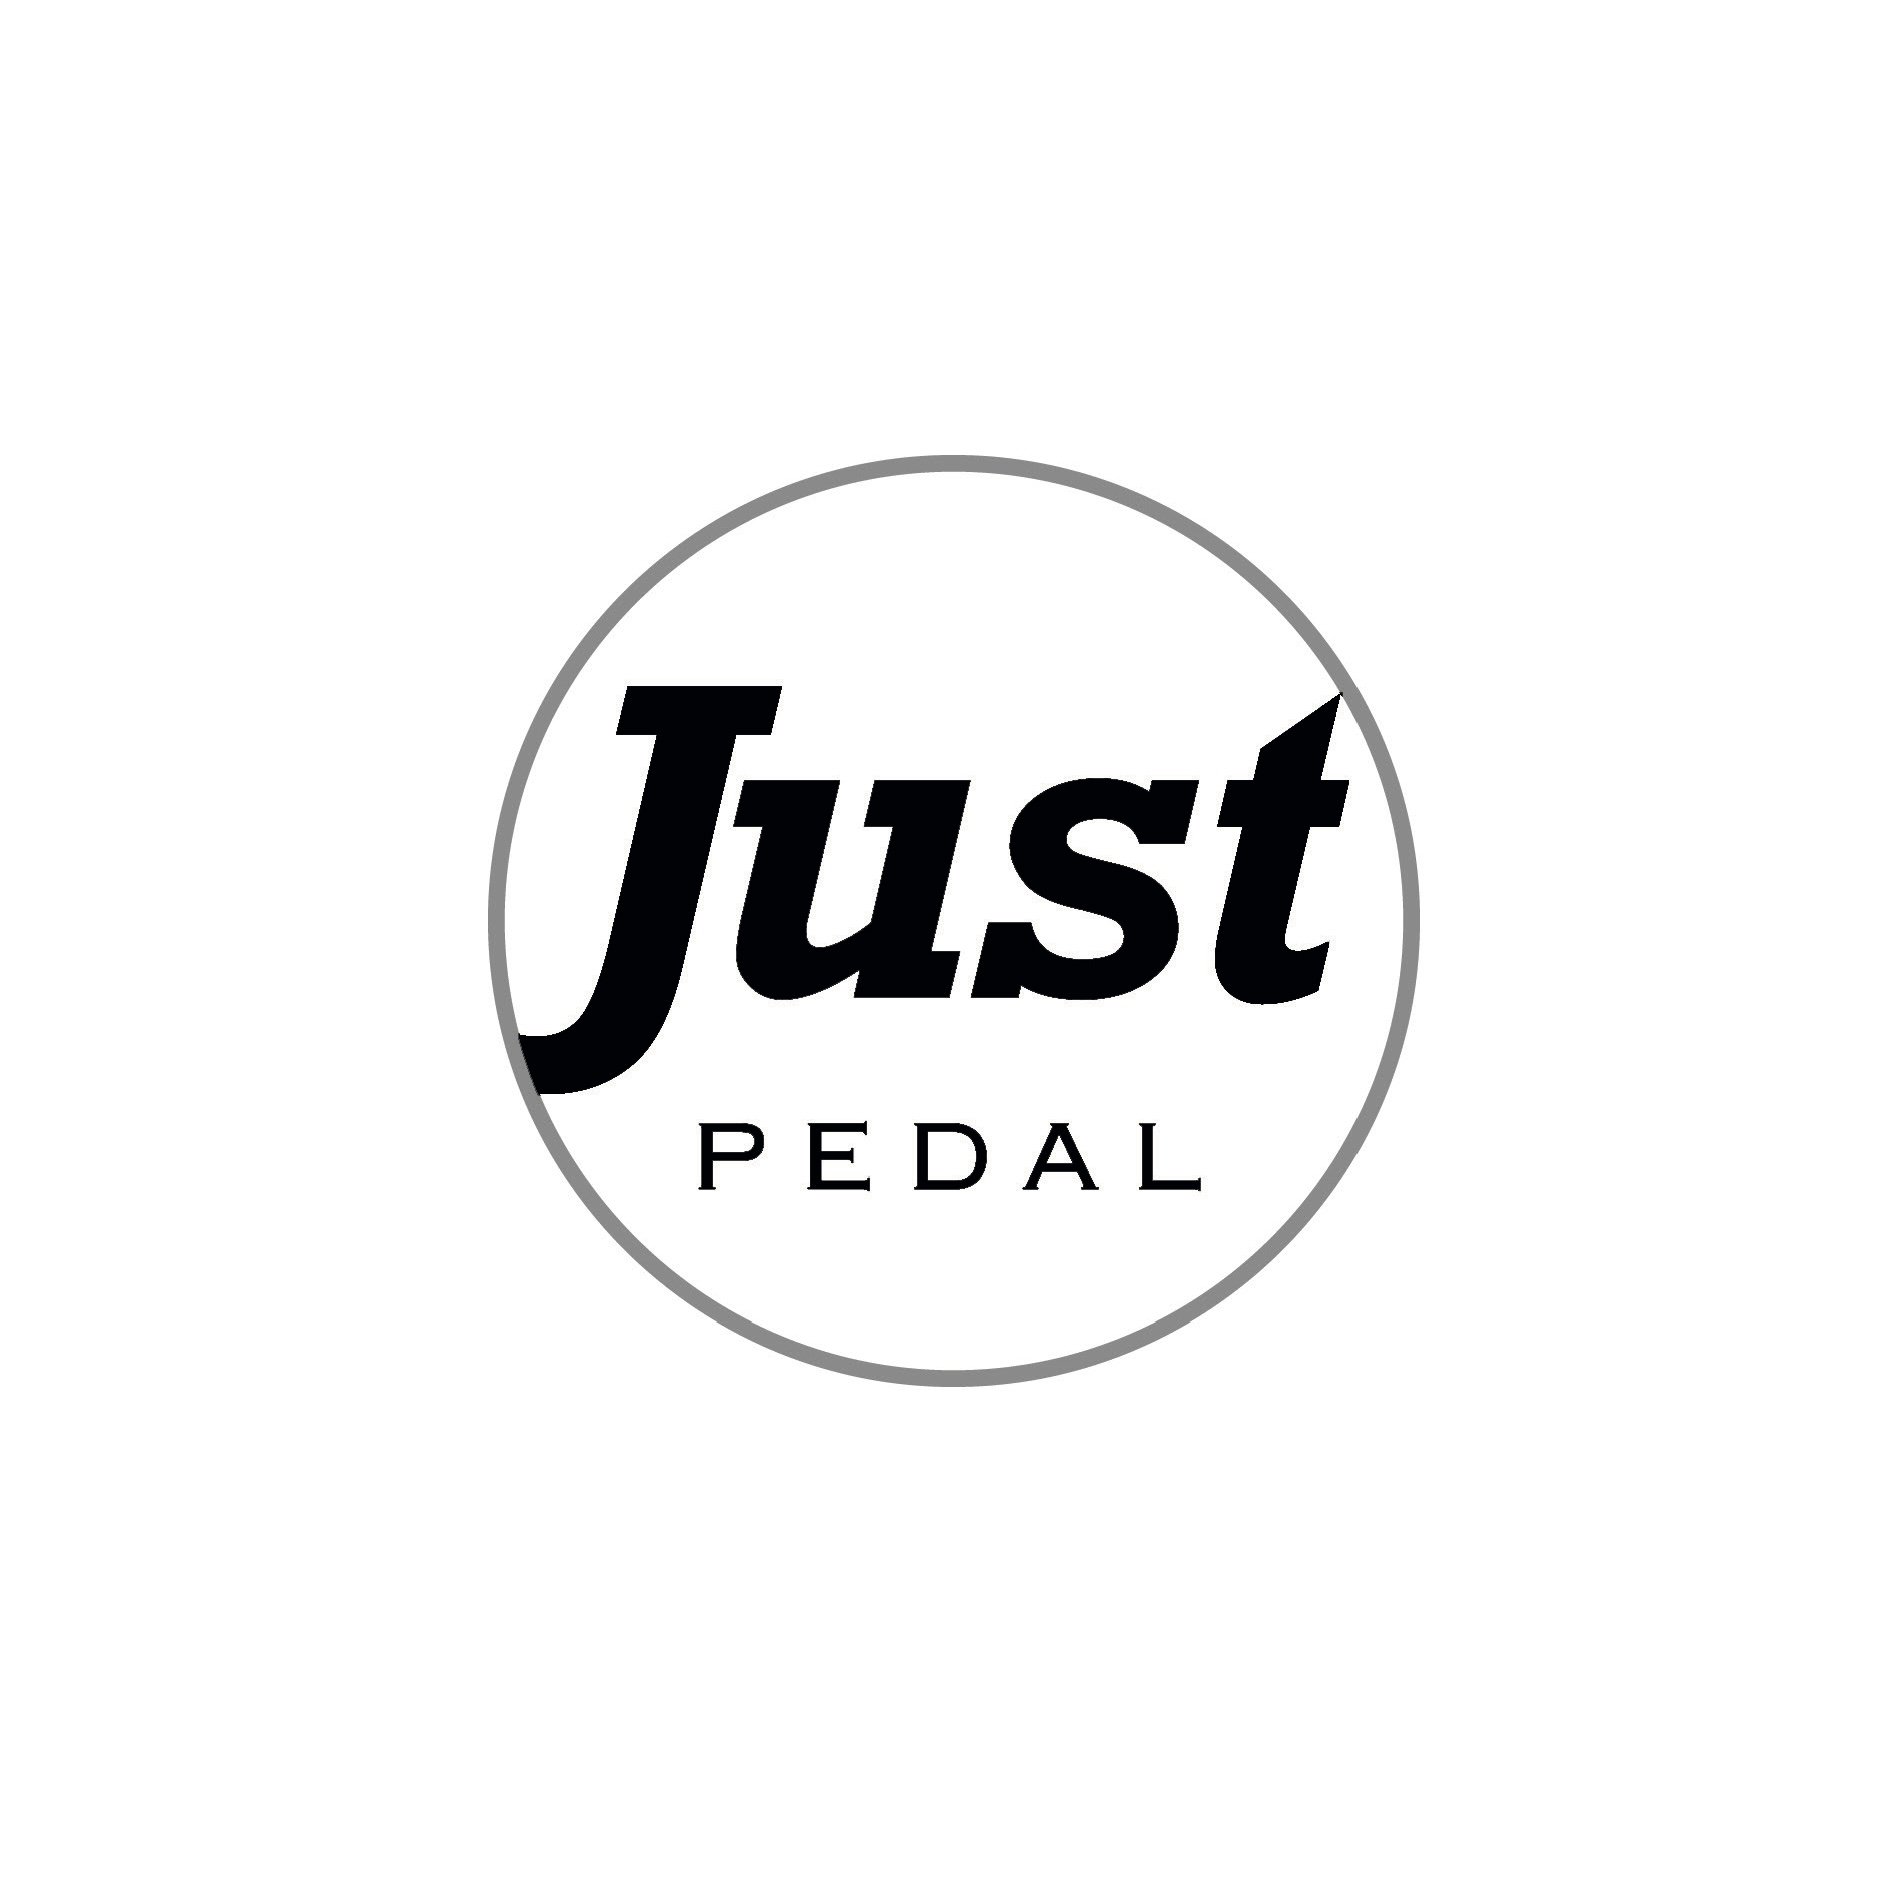 Just Pedal.jpg